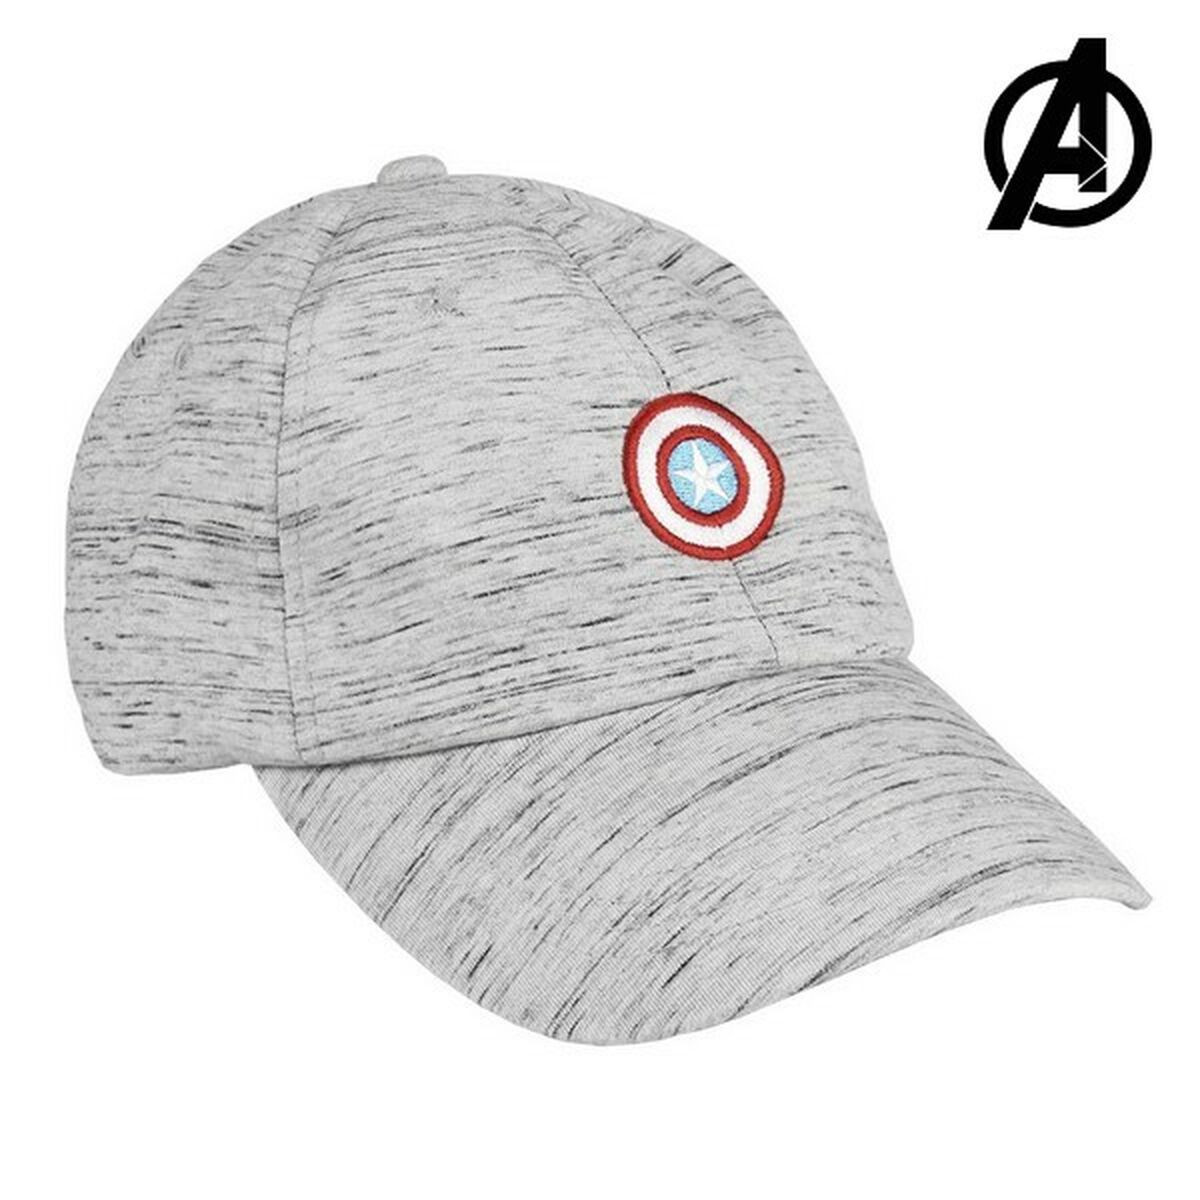 Șapcă Unisex The Avengers 77990 (58 cm)